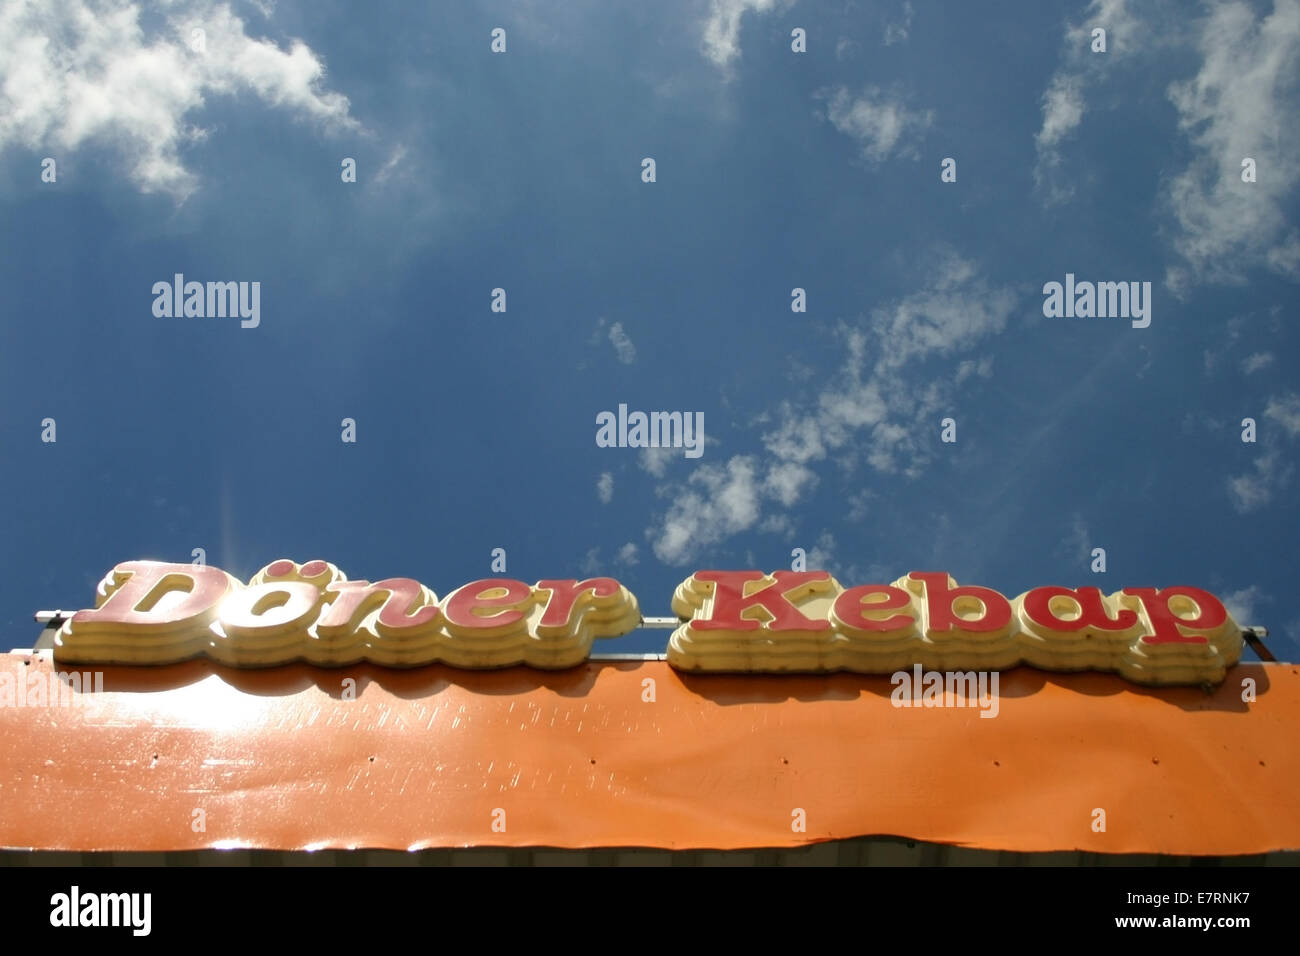 lettering doner kebab in orange letters before blue summer sky (popular fast-food i n germany), photo: July 11, 2006. Stock Photo